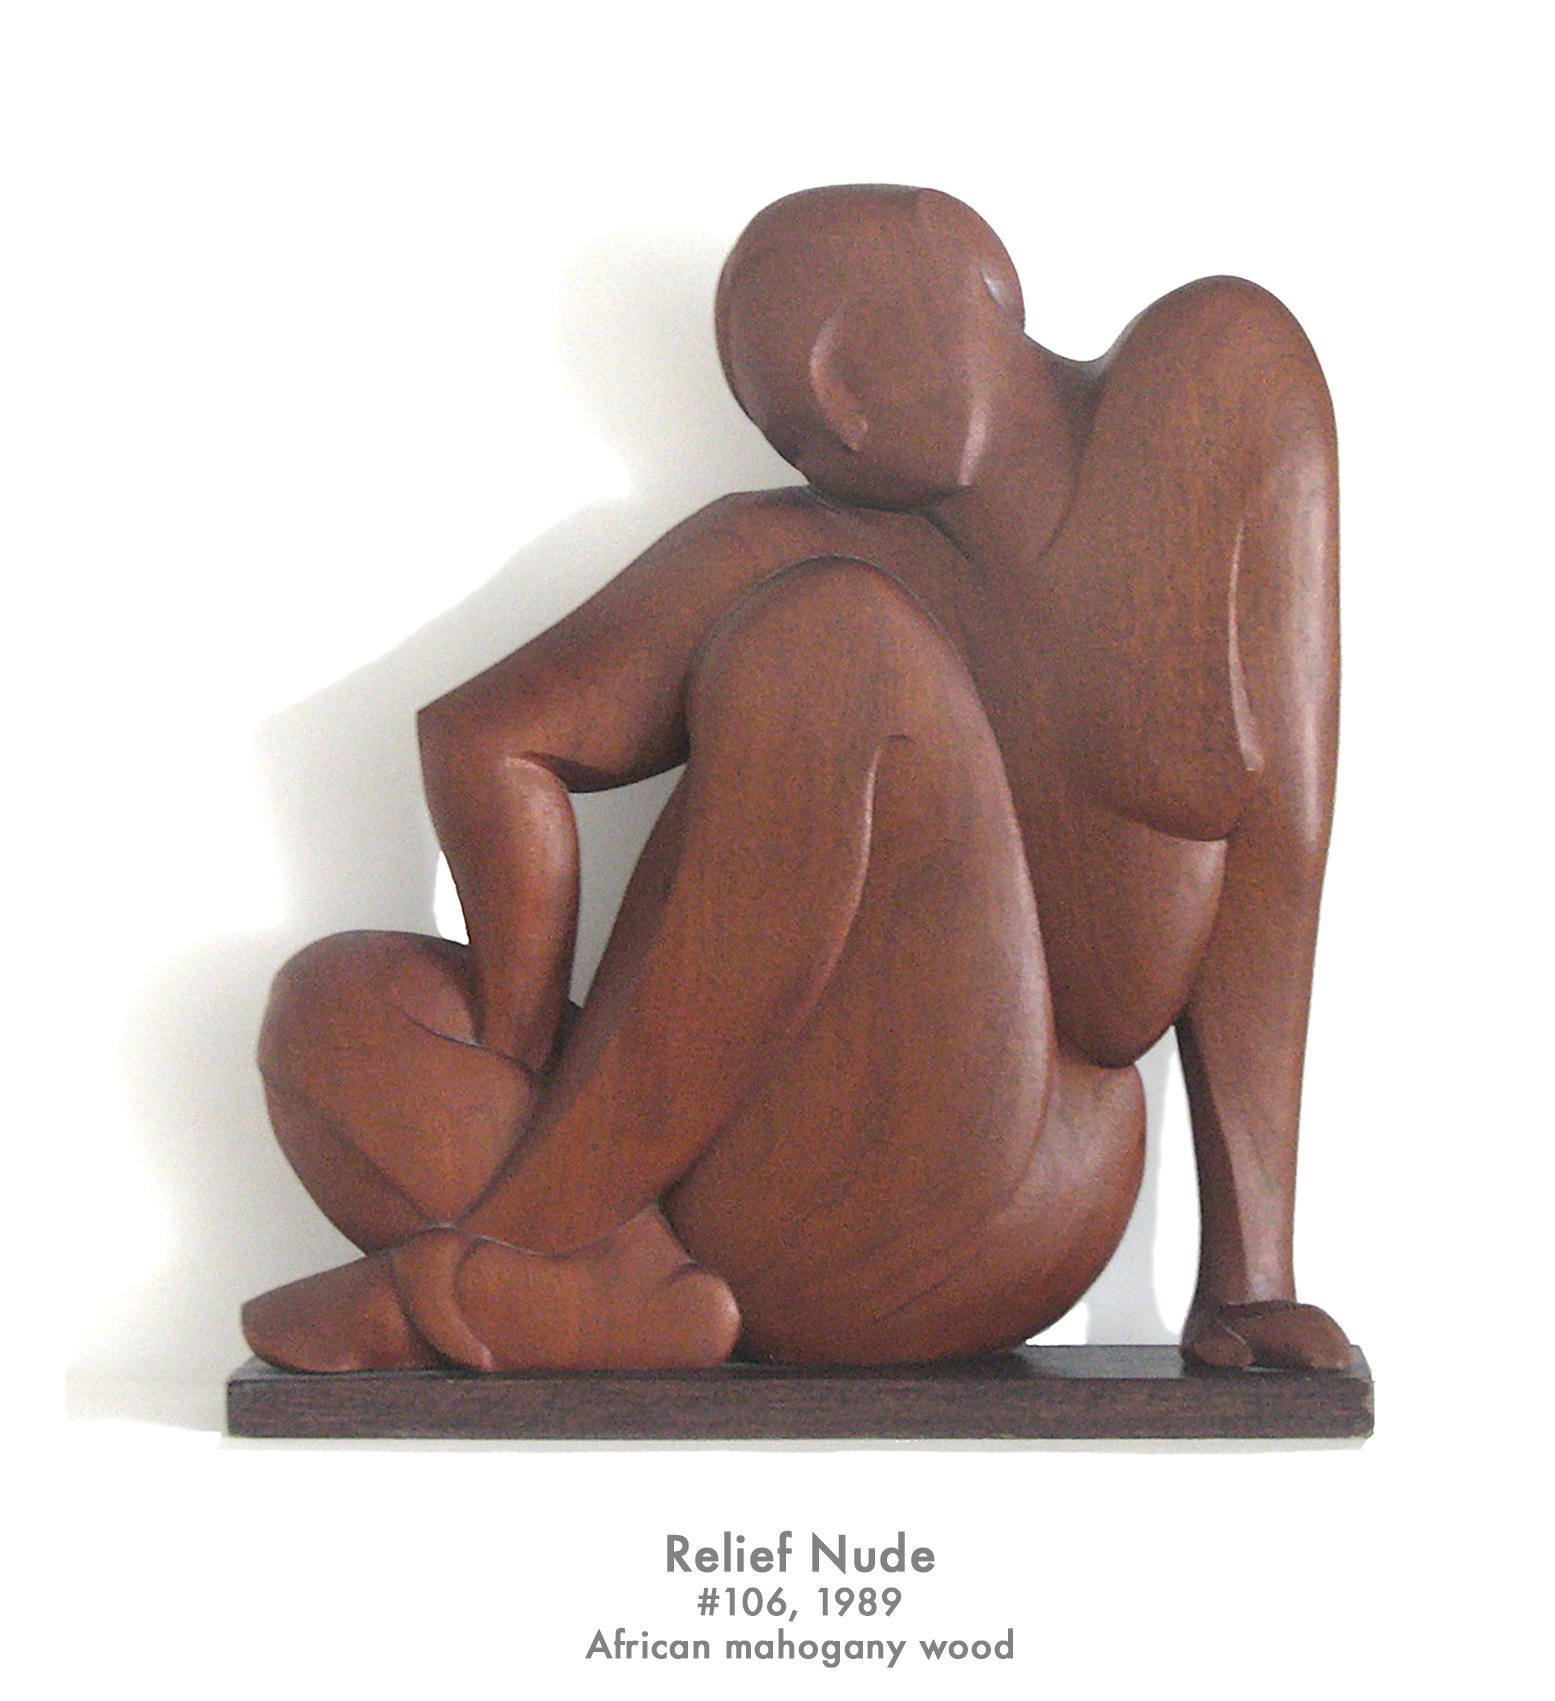 Relief Nude, 1989, African mahogany, #106